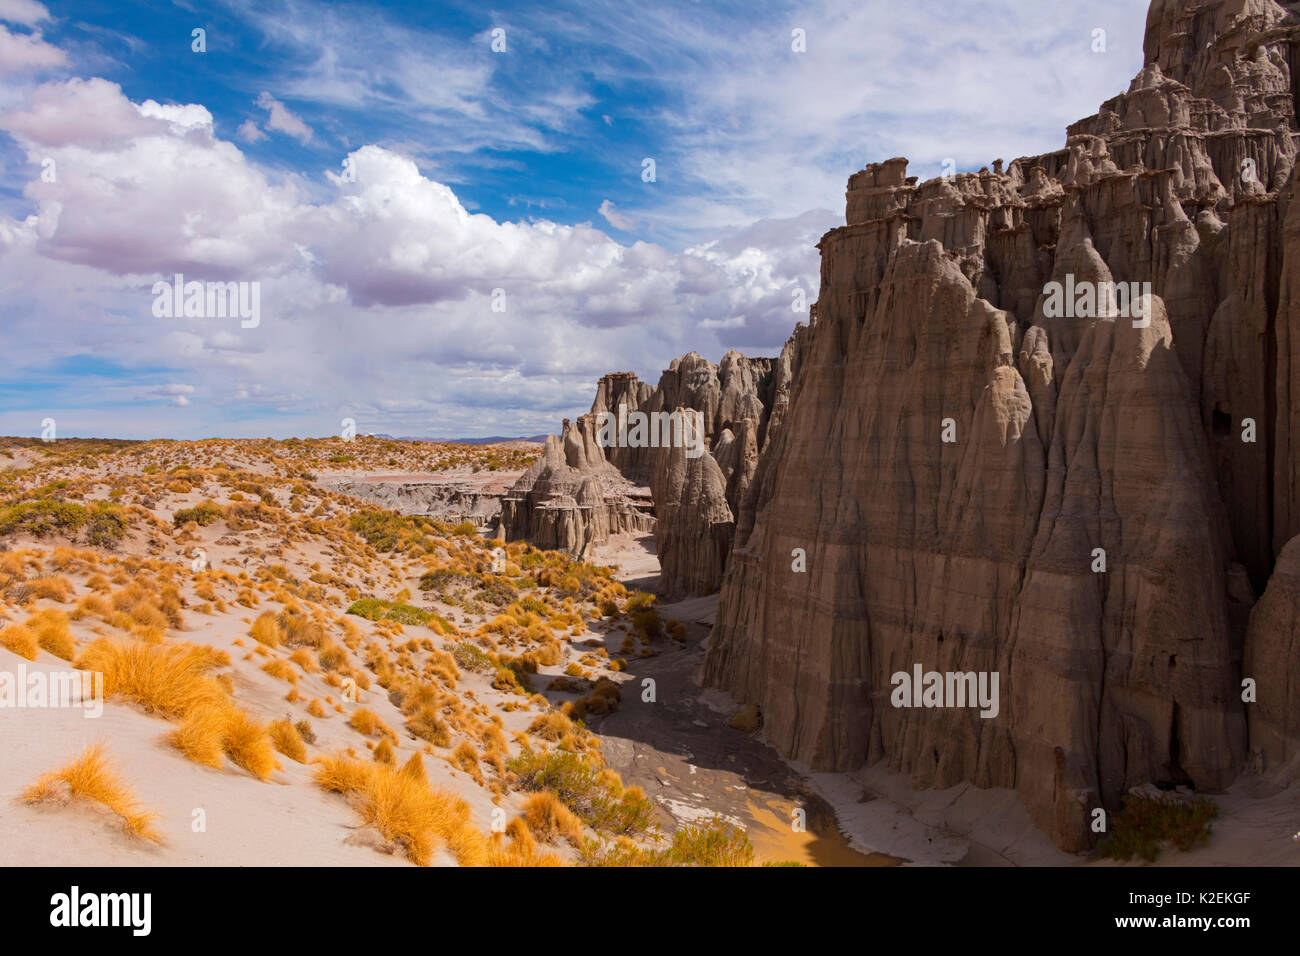 Rock pinnacles with Tussock grass (Festuca orthophylla)., Ciudad del Encanto, Bolivia. Stock Photo